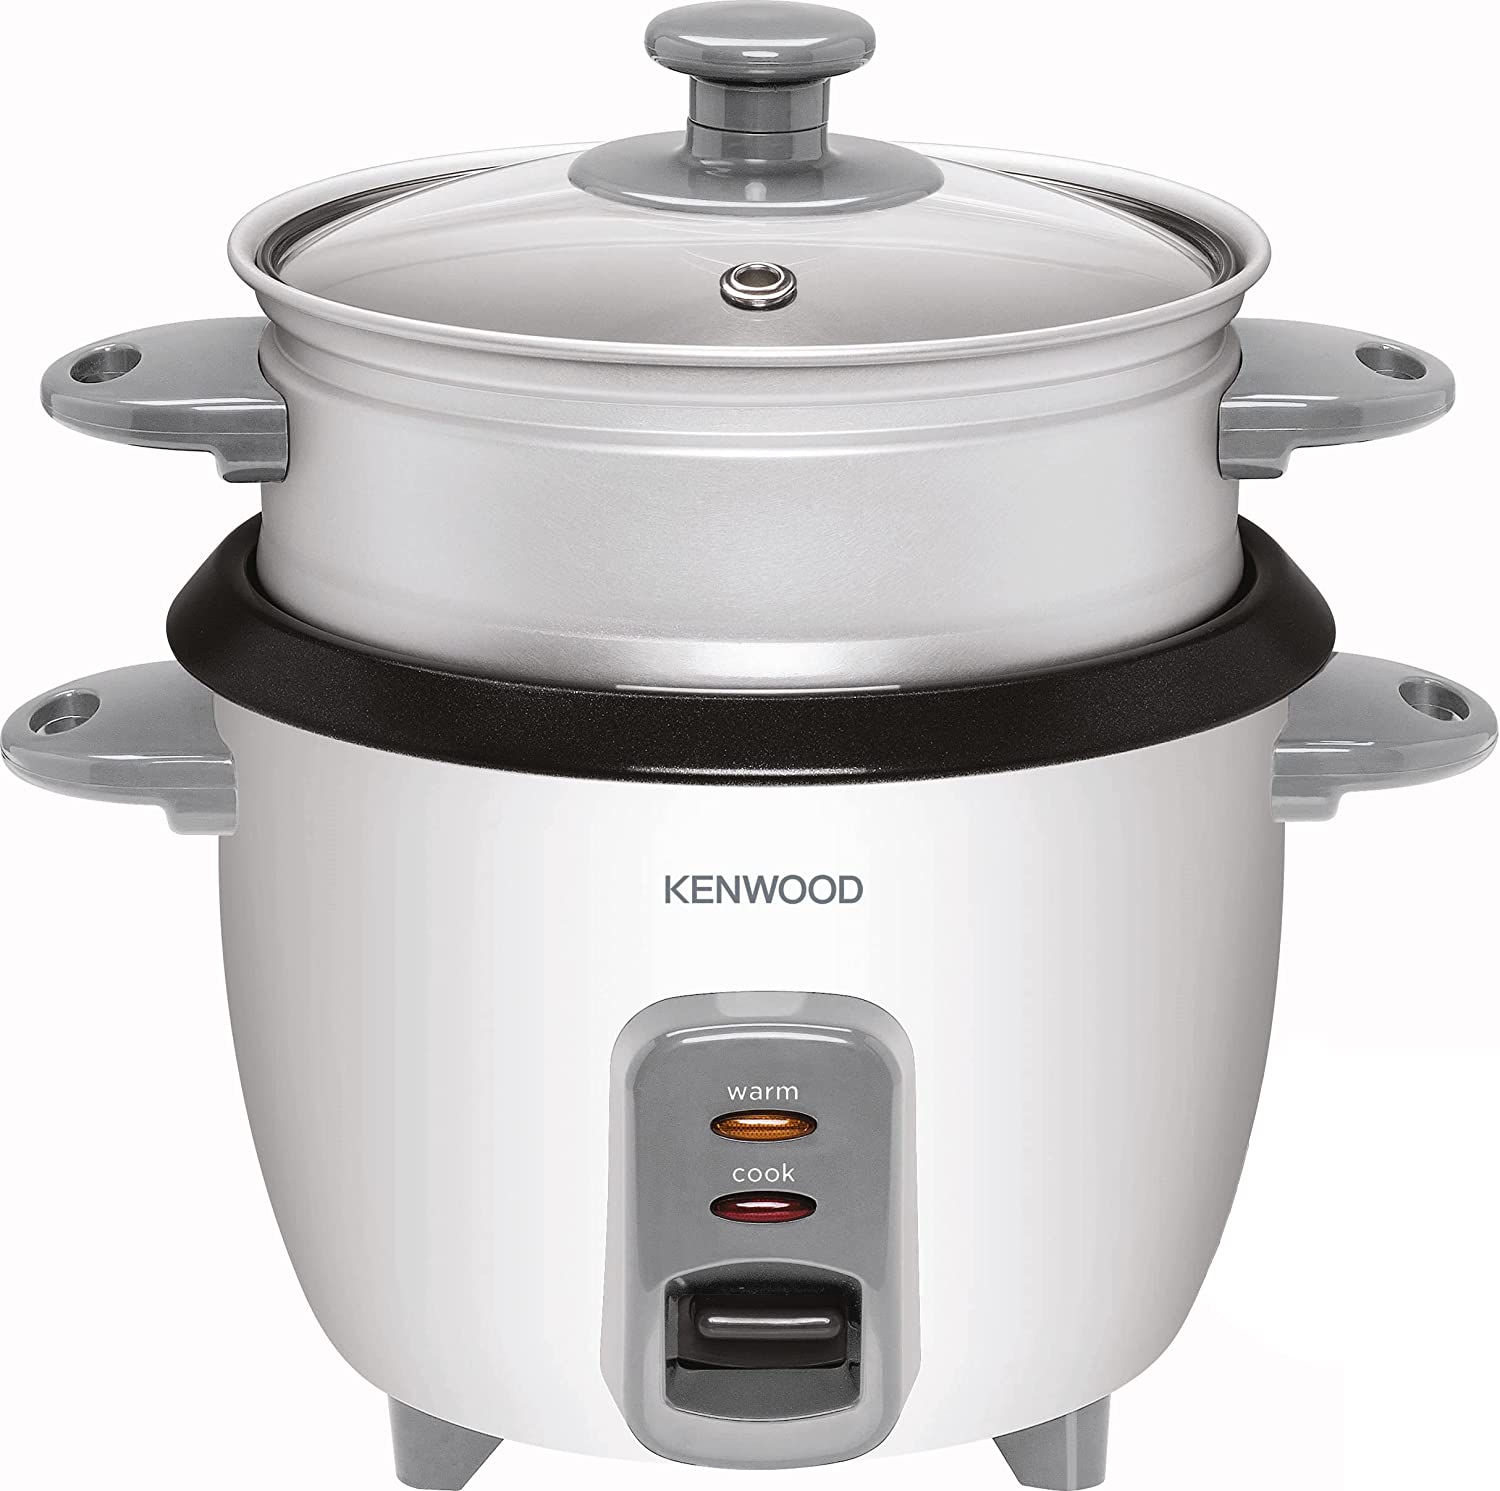 KENWOOD 2-in-1 Rice Cooker 0.6L 3-Cups Rice with Food Steamer Basket جهاز طهي الارز 2 في 1 0.6 لتر من كينوود، 3 اكواب مع سلة طهي بالبخار للطعام